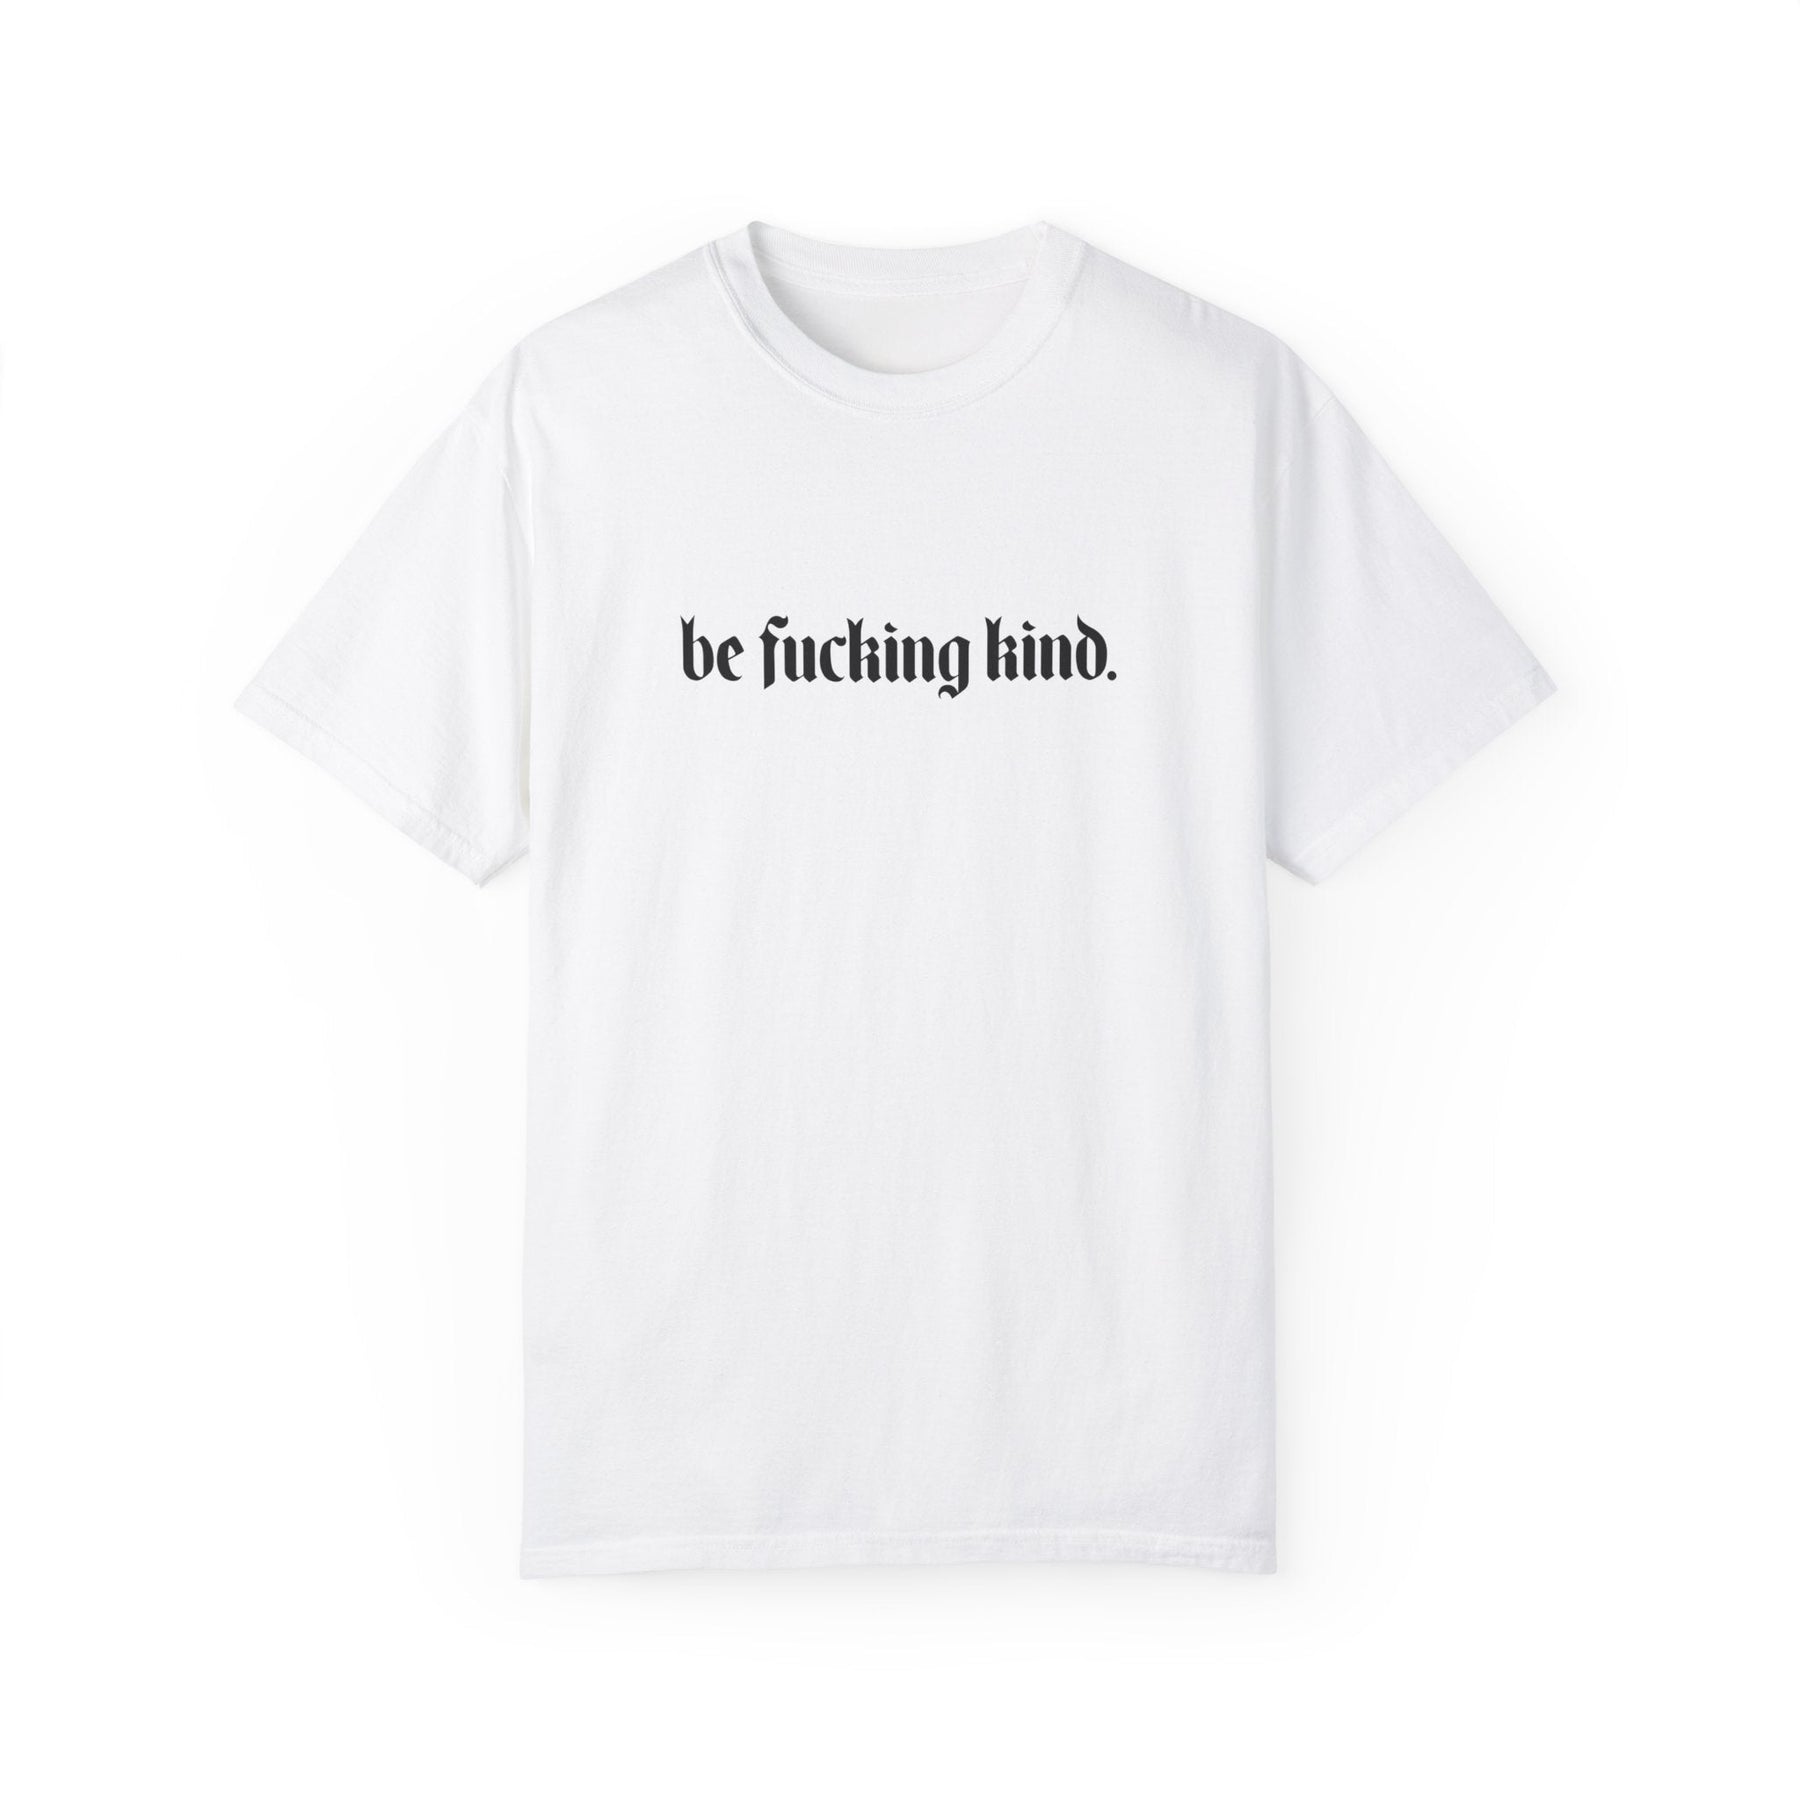 Be Fucking Kind Comfy Tee - Goth Cloth Co.T - Shirt11226613744192340856